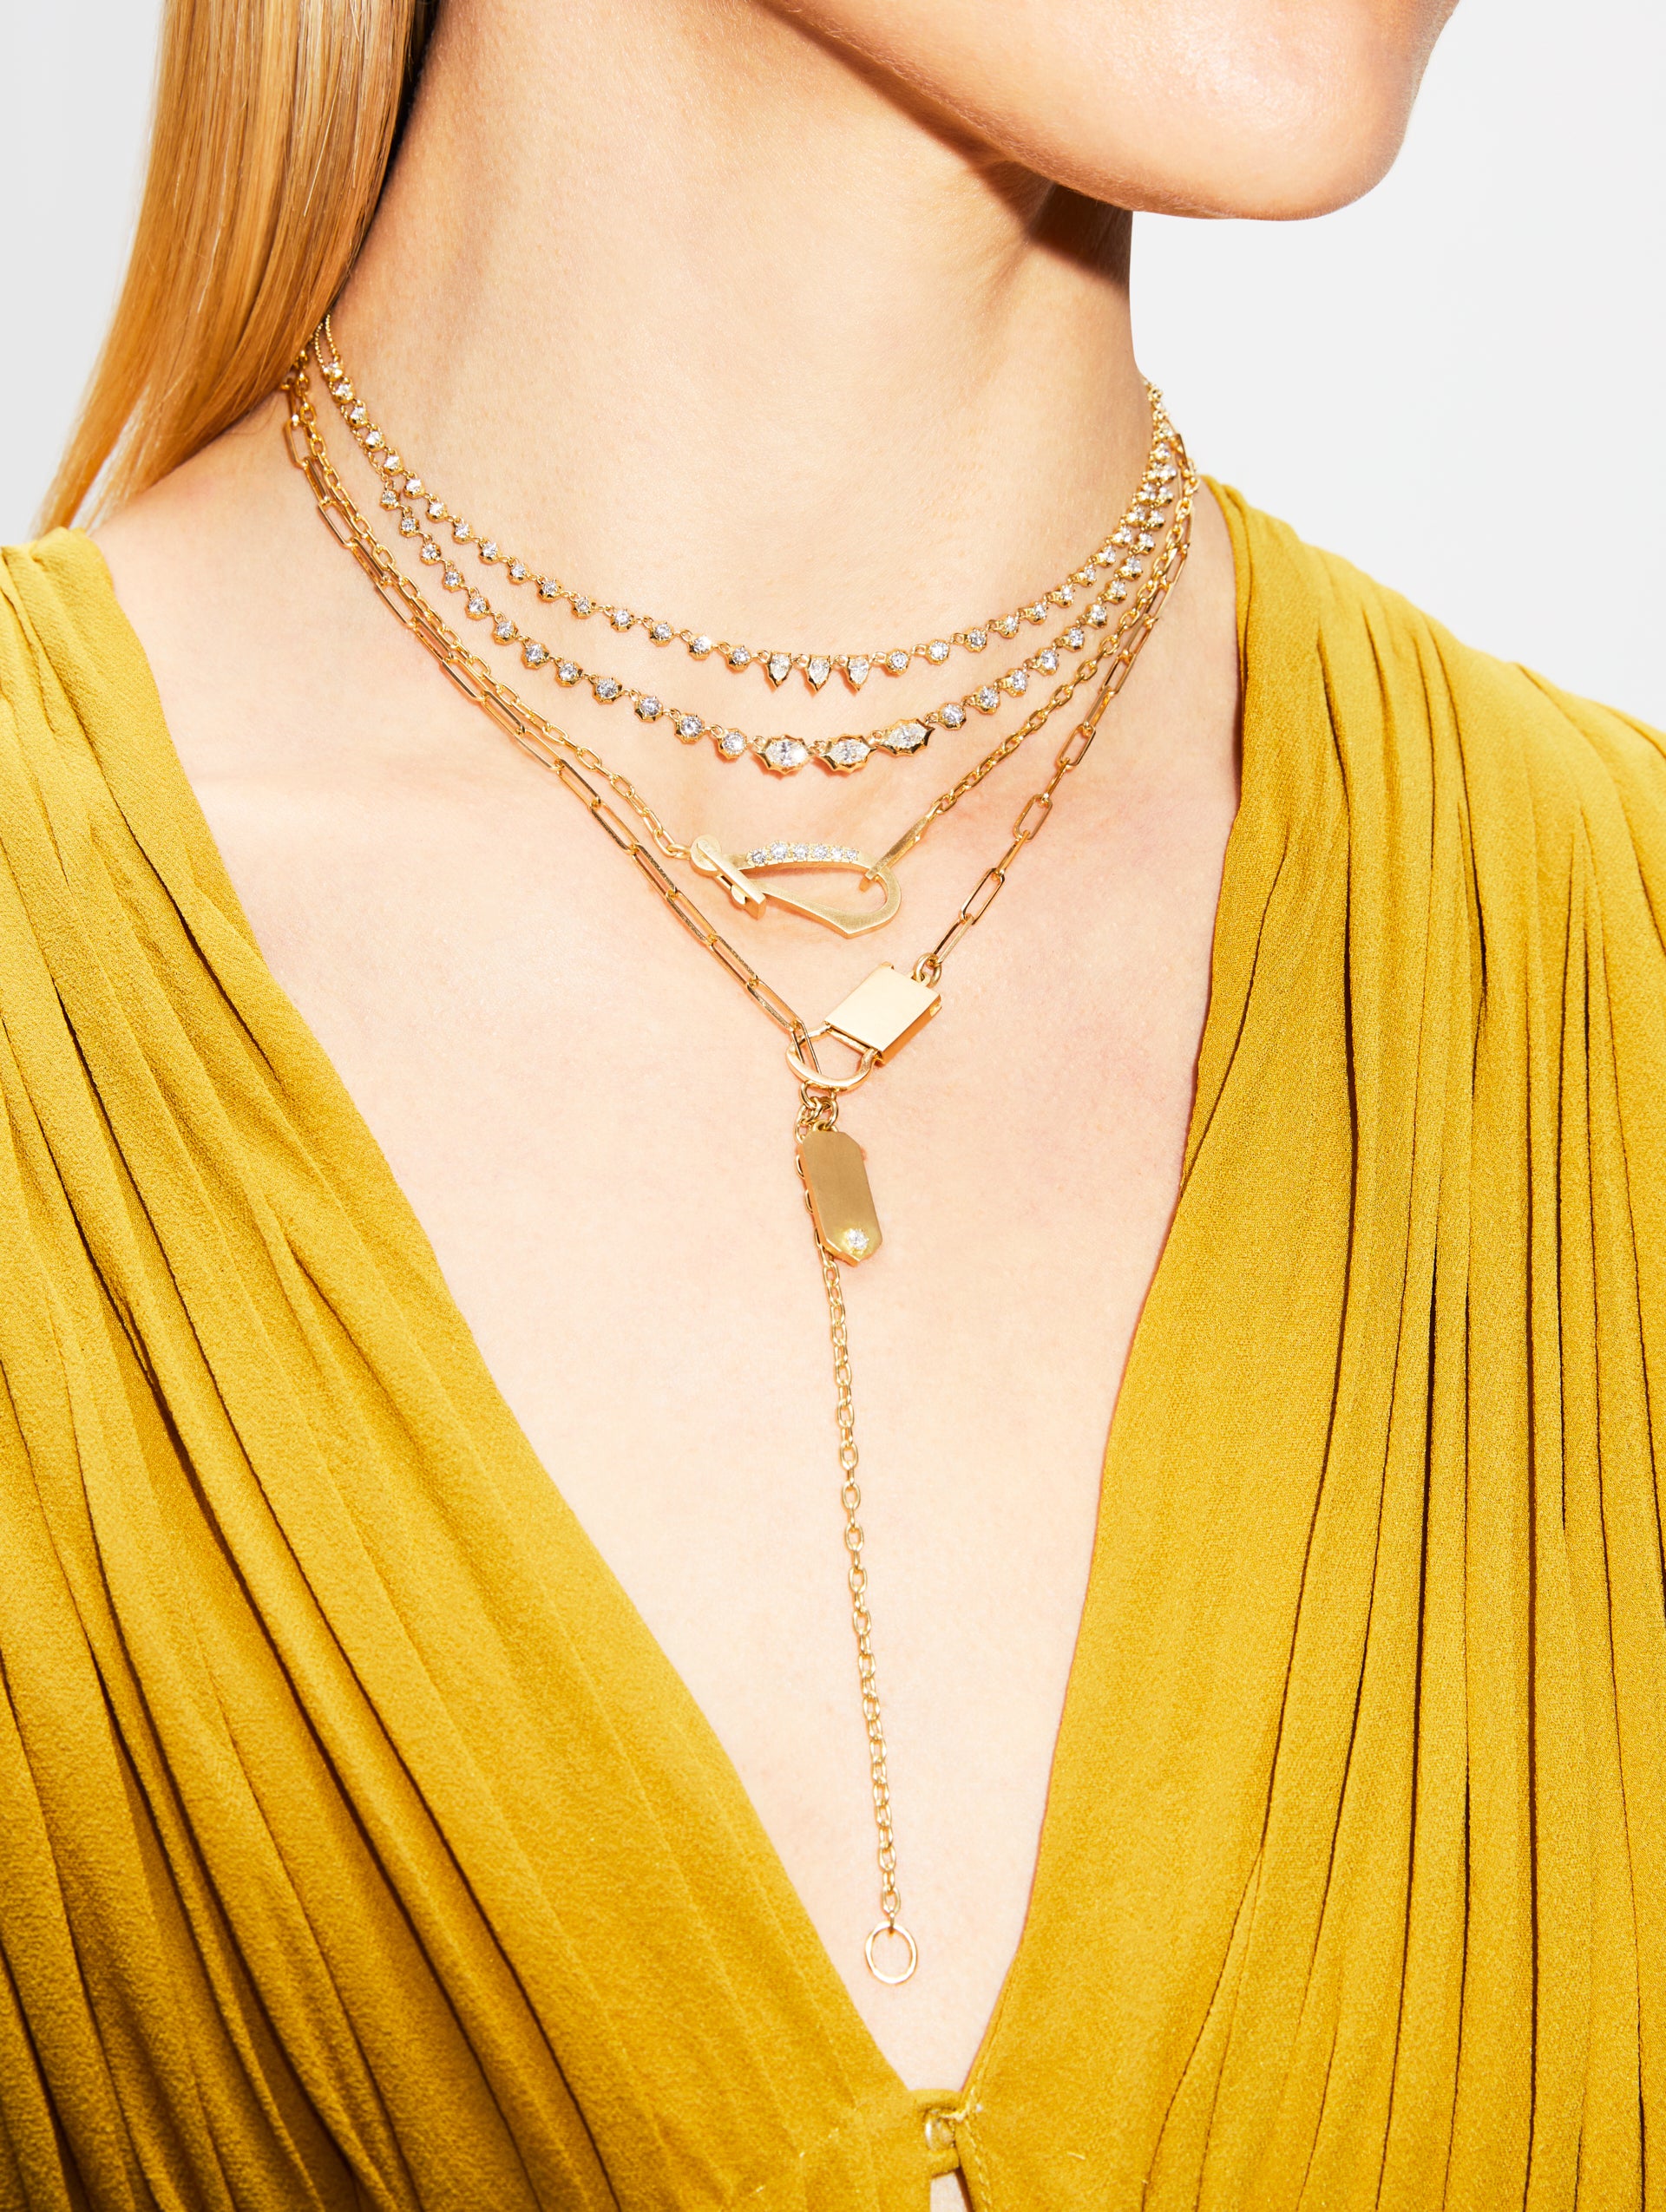 Lola Rose Statement Fashion Necklaces & Pendants for sale | eBay